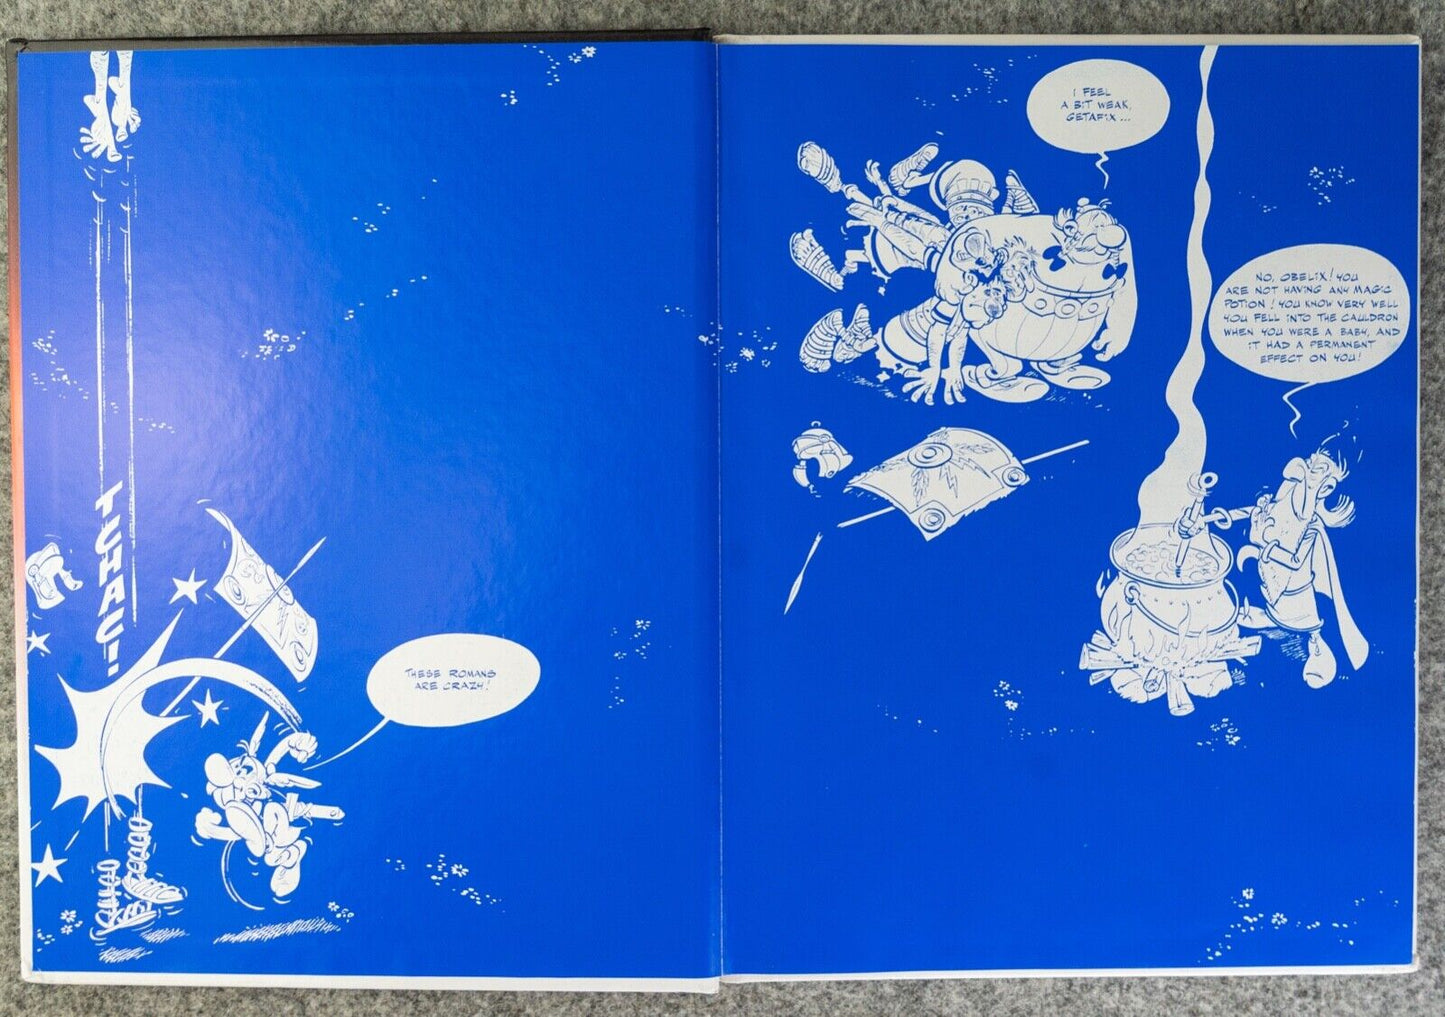 Obelix’s Birthday: 2009 Hodder 1st UK Edition Hardback Book EO Uderzo